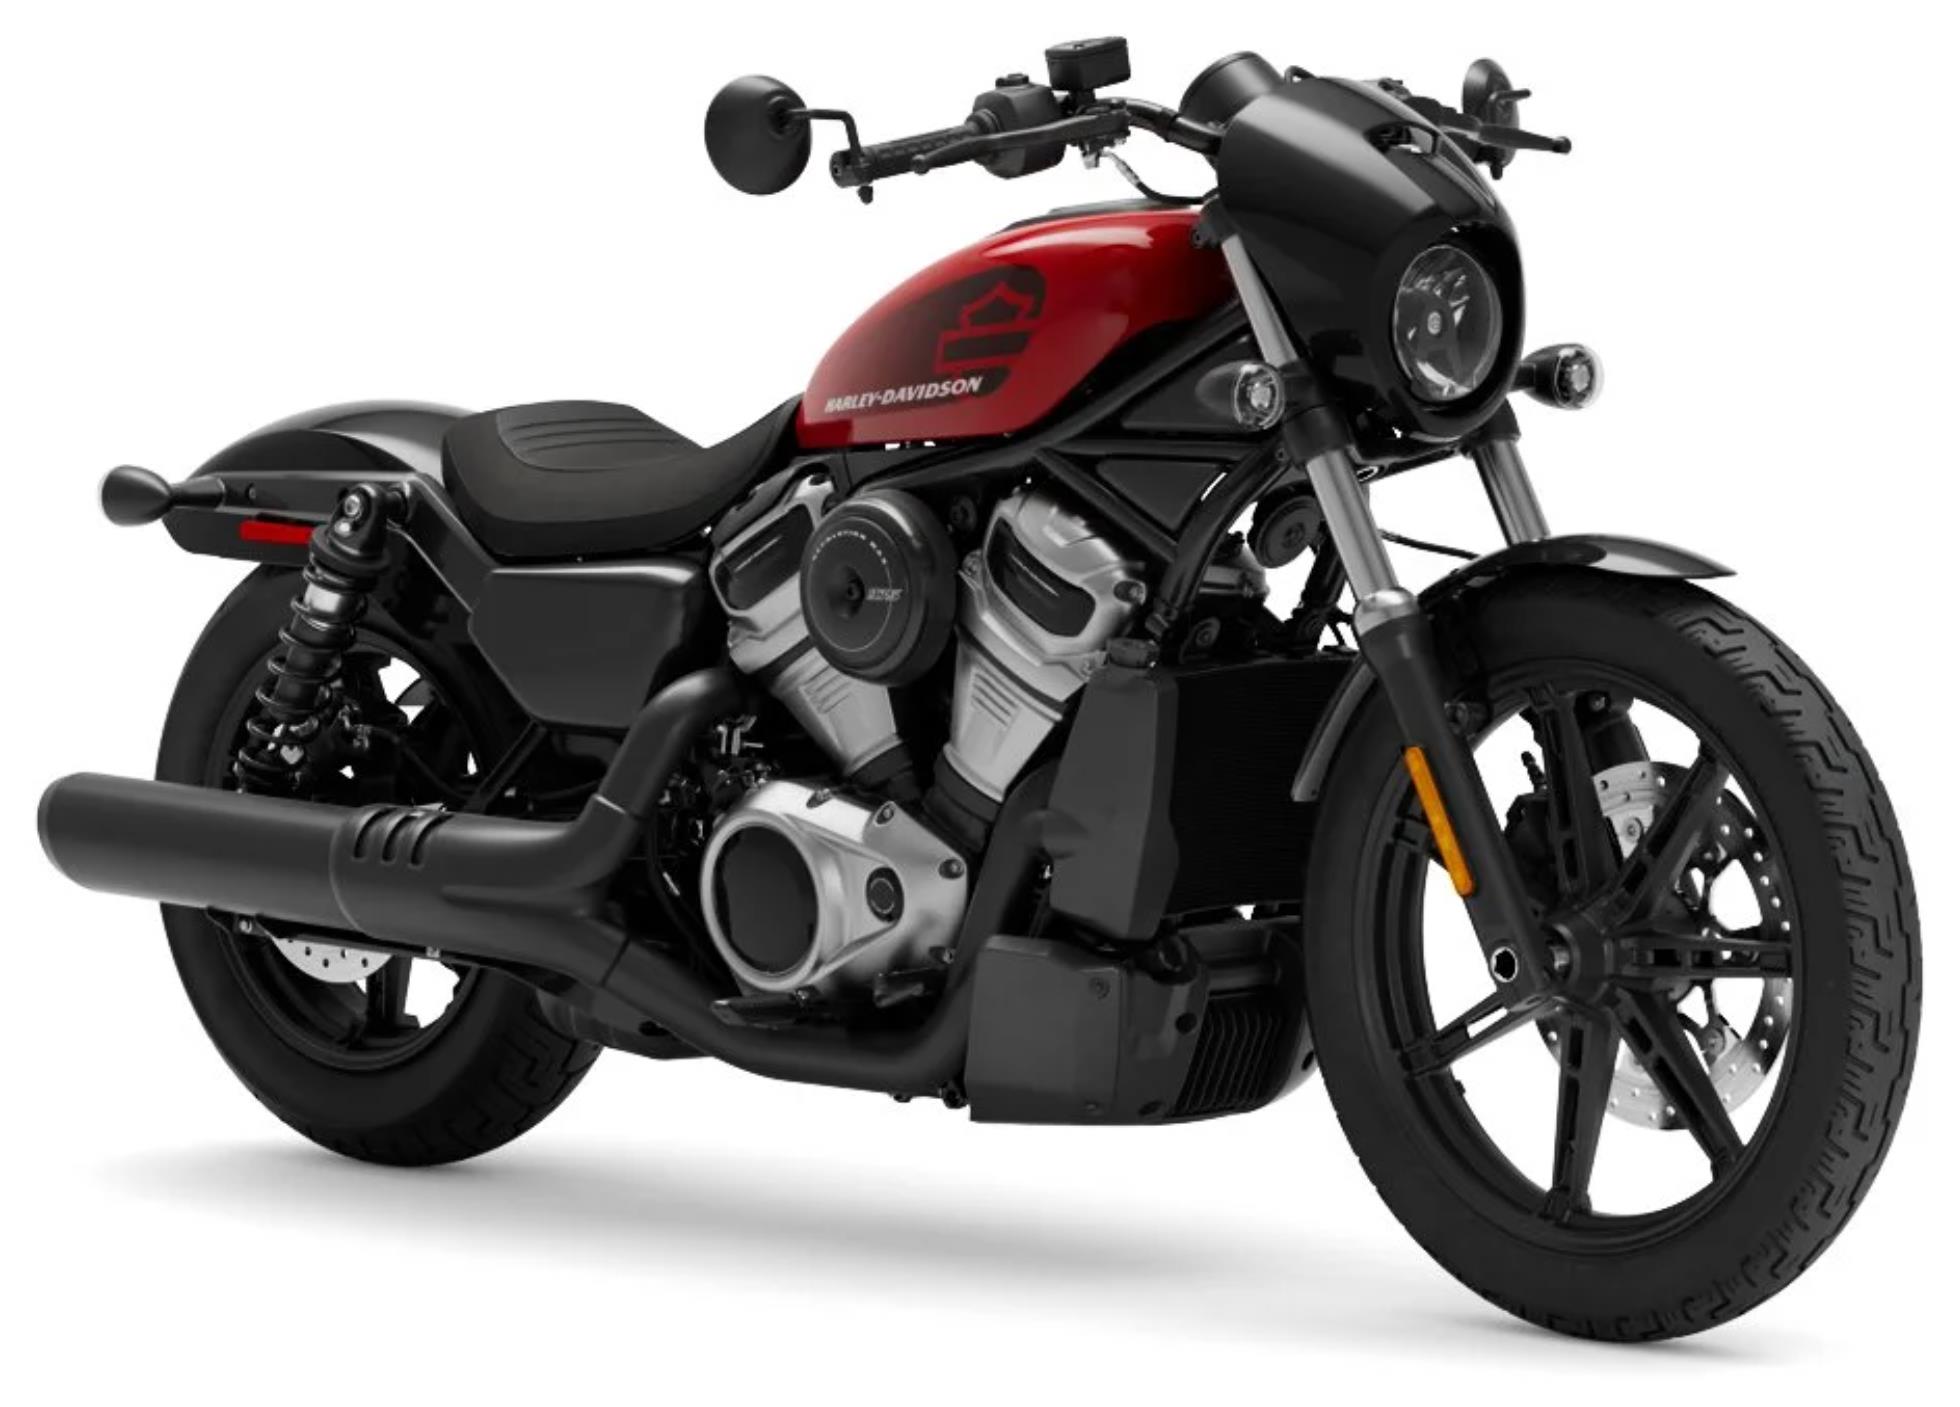 2023 HarleyDavidson Nightster Price, Specs, Top Speed & Mileage in India